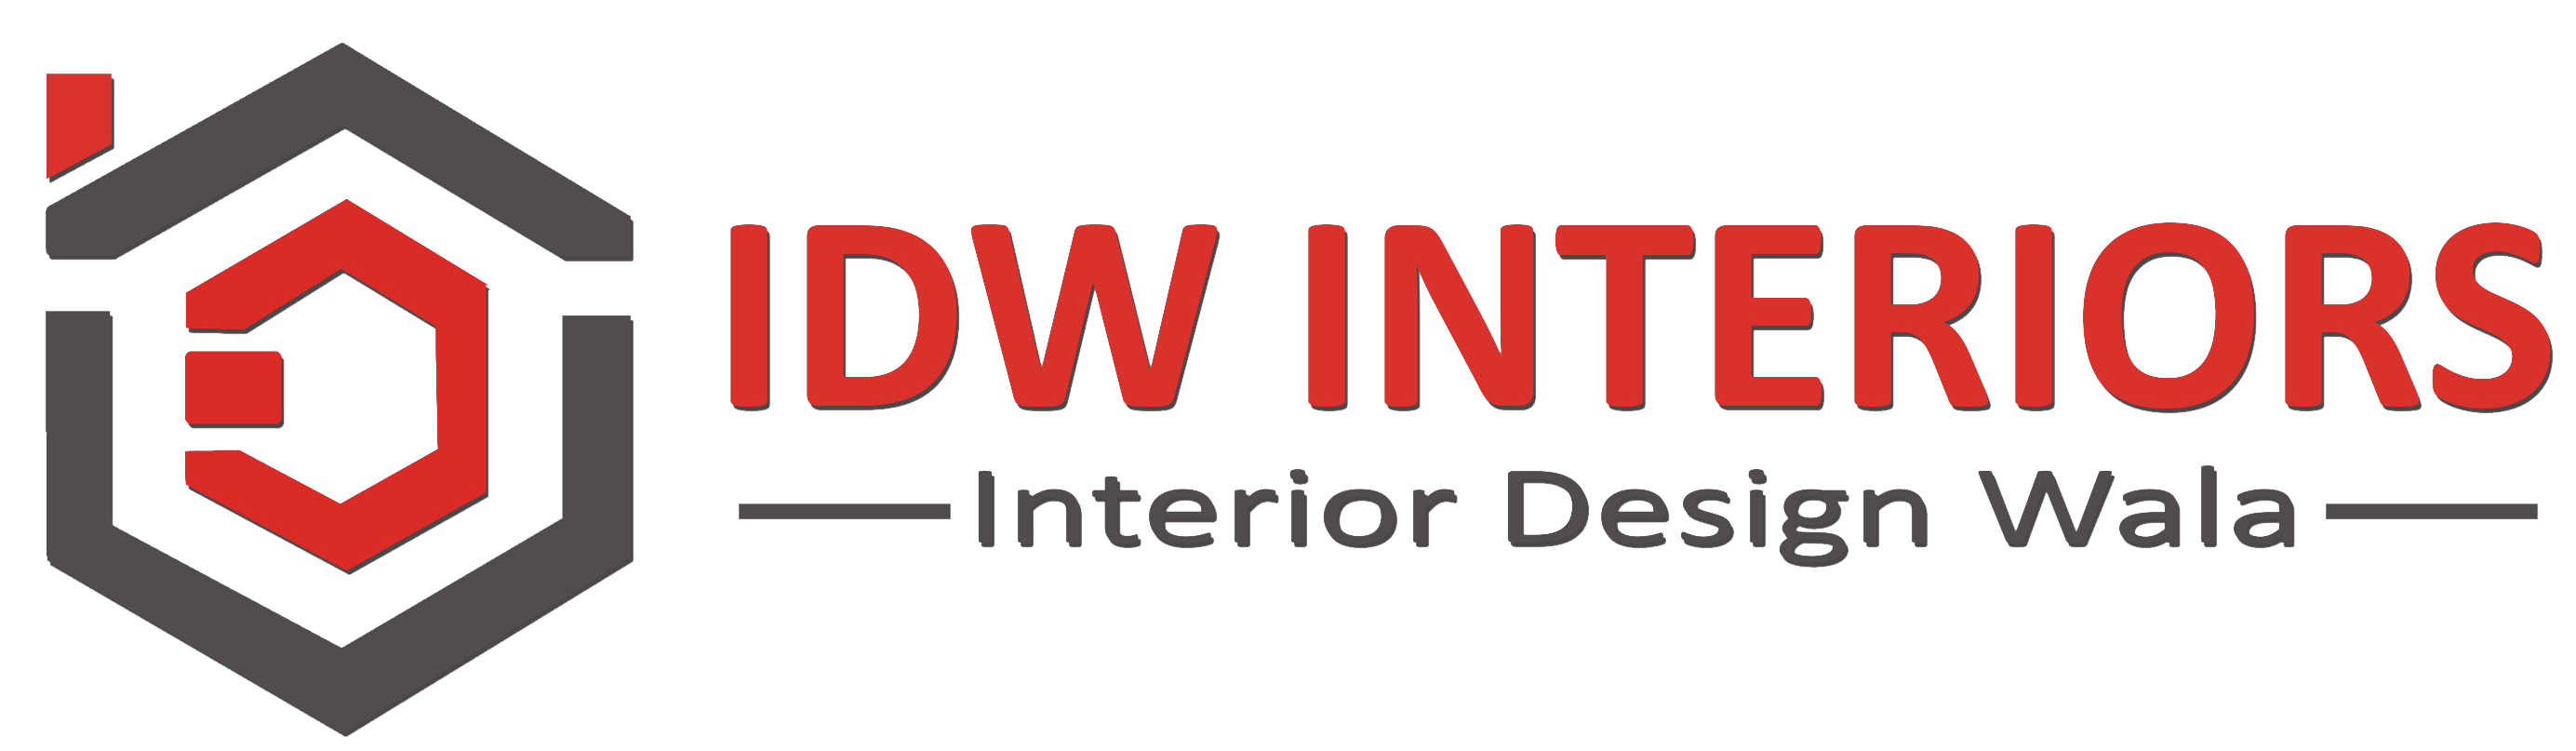 IDW Interiors